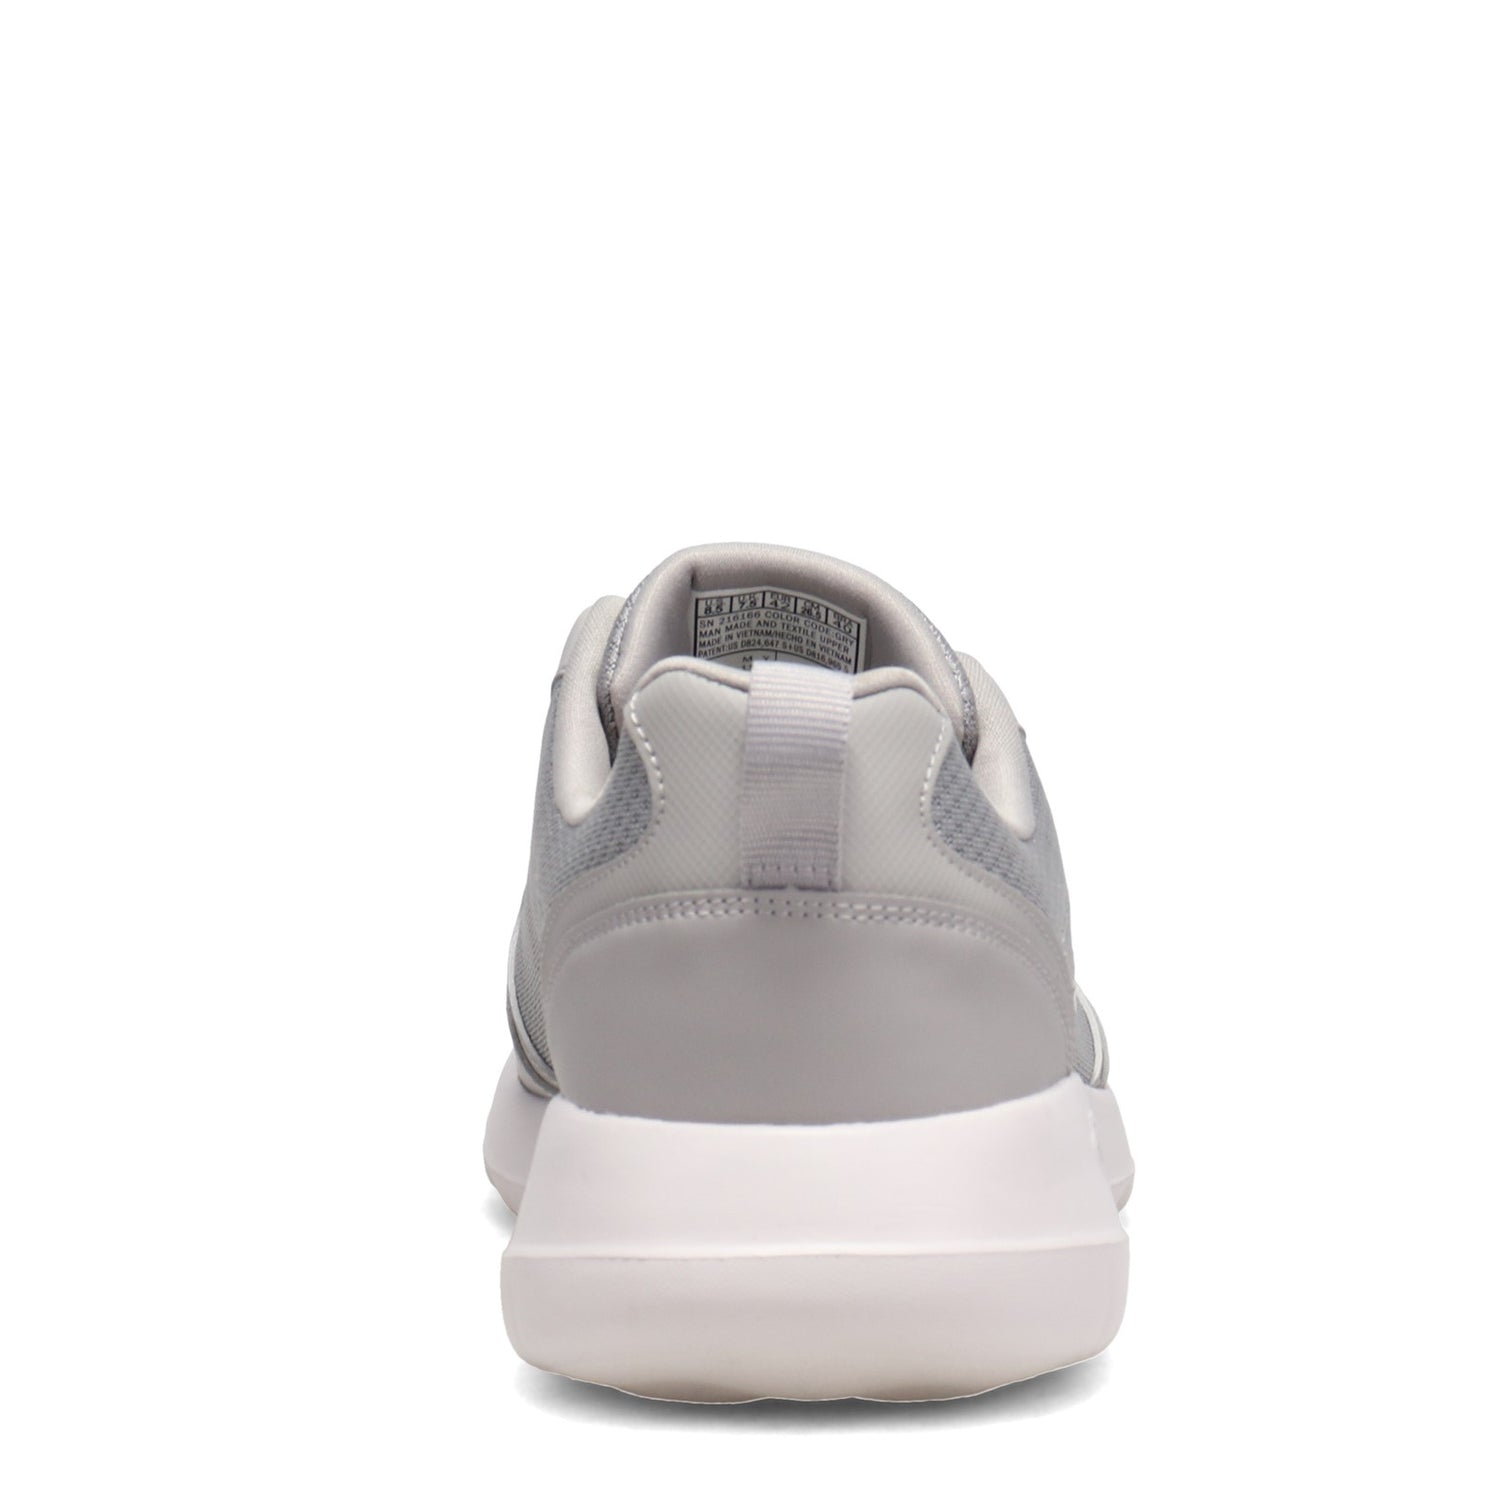 Peltz Shoes  Men's Skechers Go Walk Max - Painted Sky Sneaker GRAY 216166-GRY